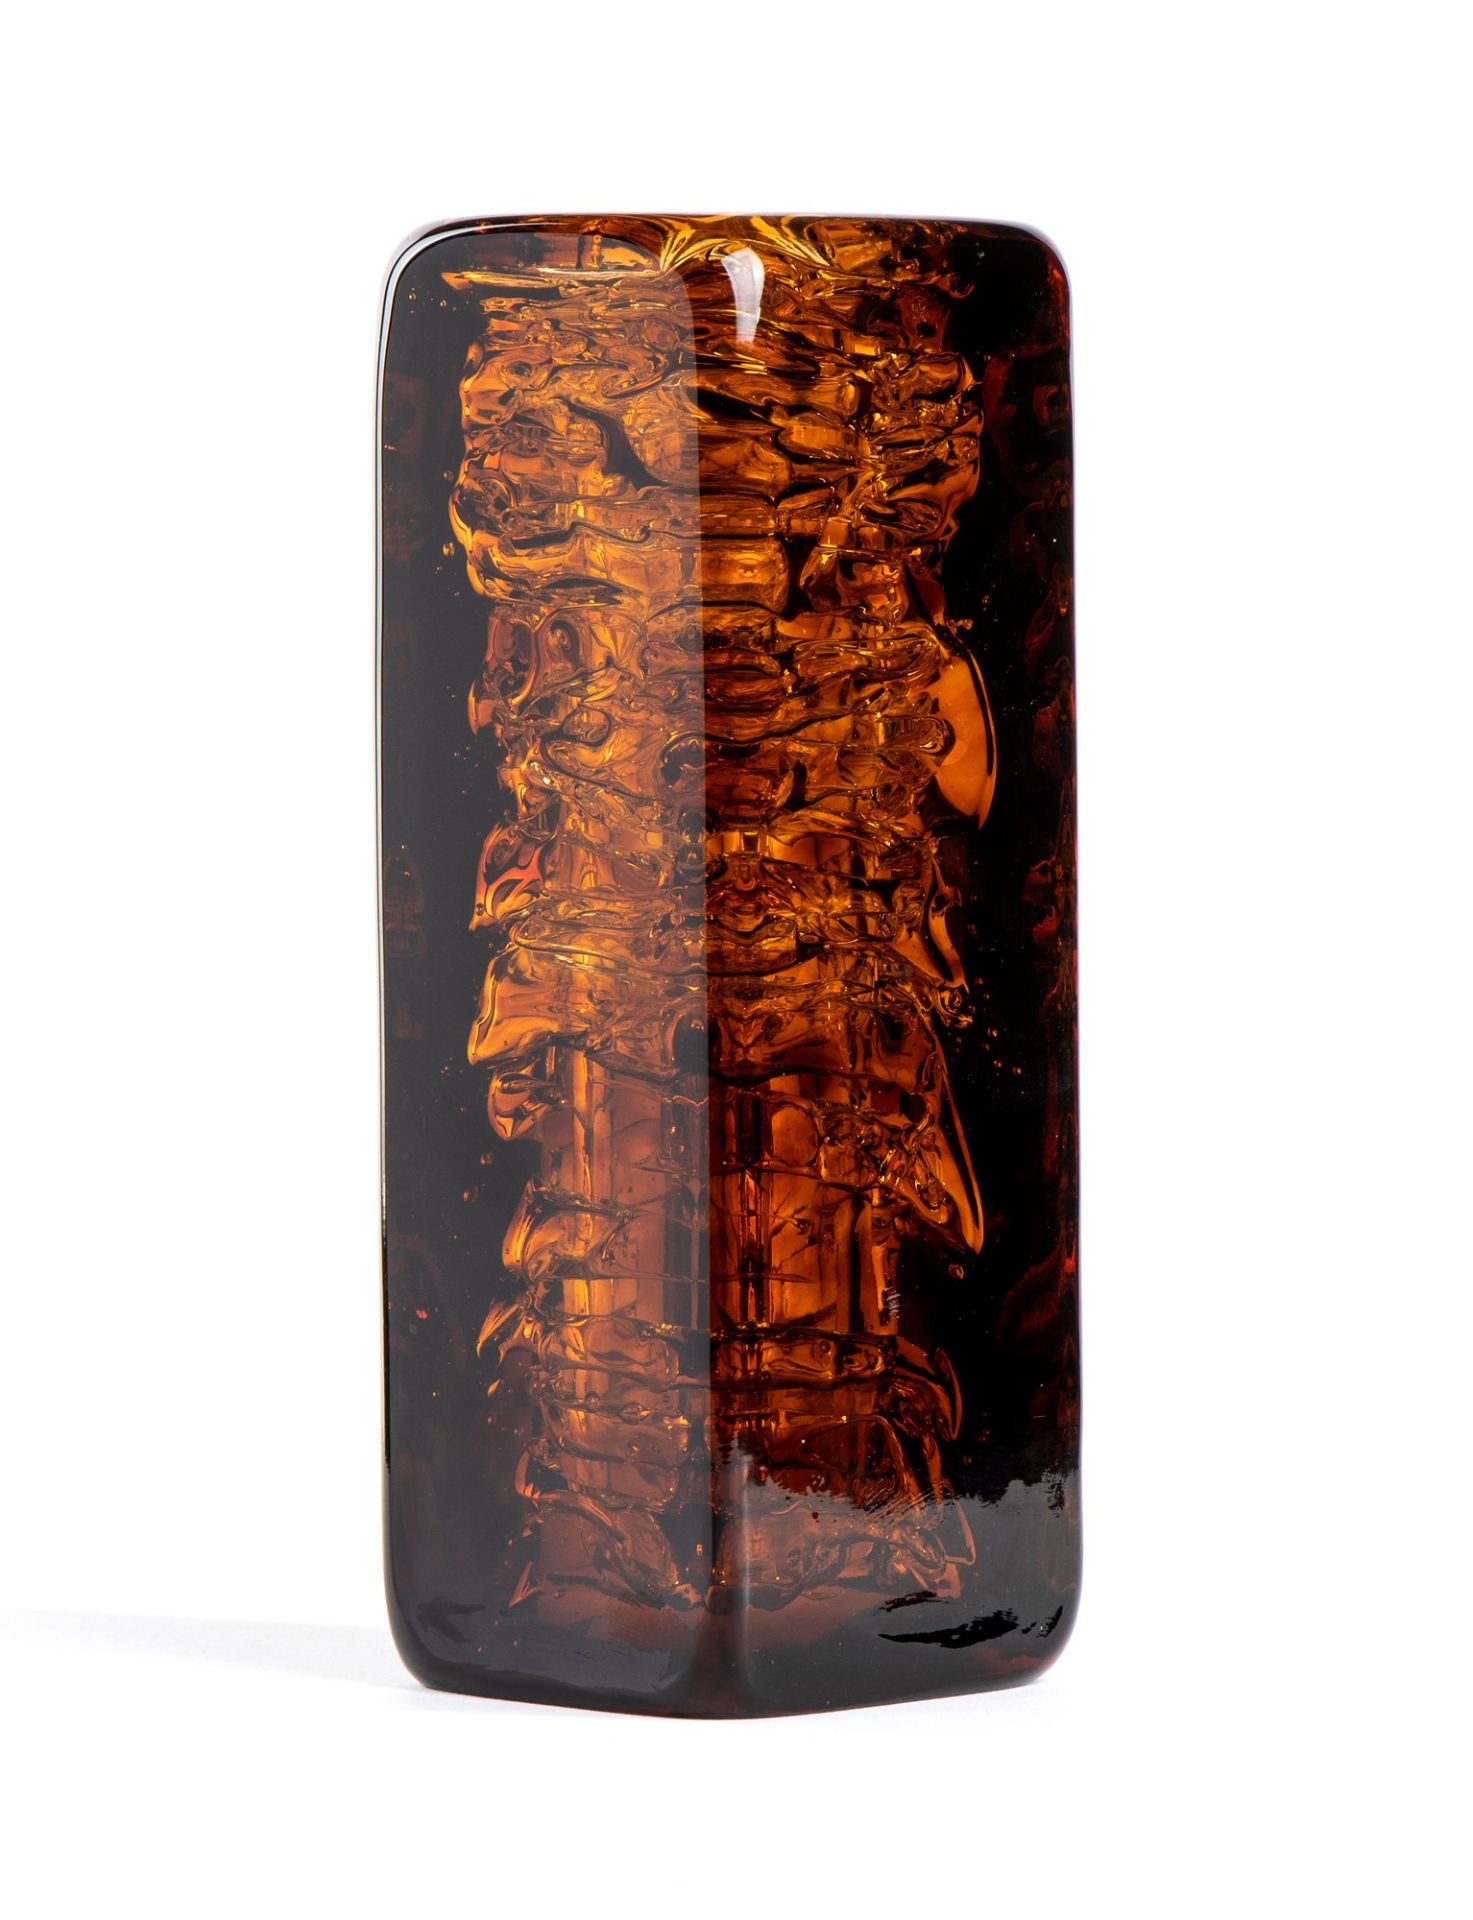 Vizner Frantisek 1936-2011 Whirlpool vase in amber tones - Image 5 of 11